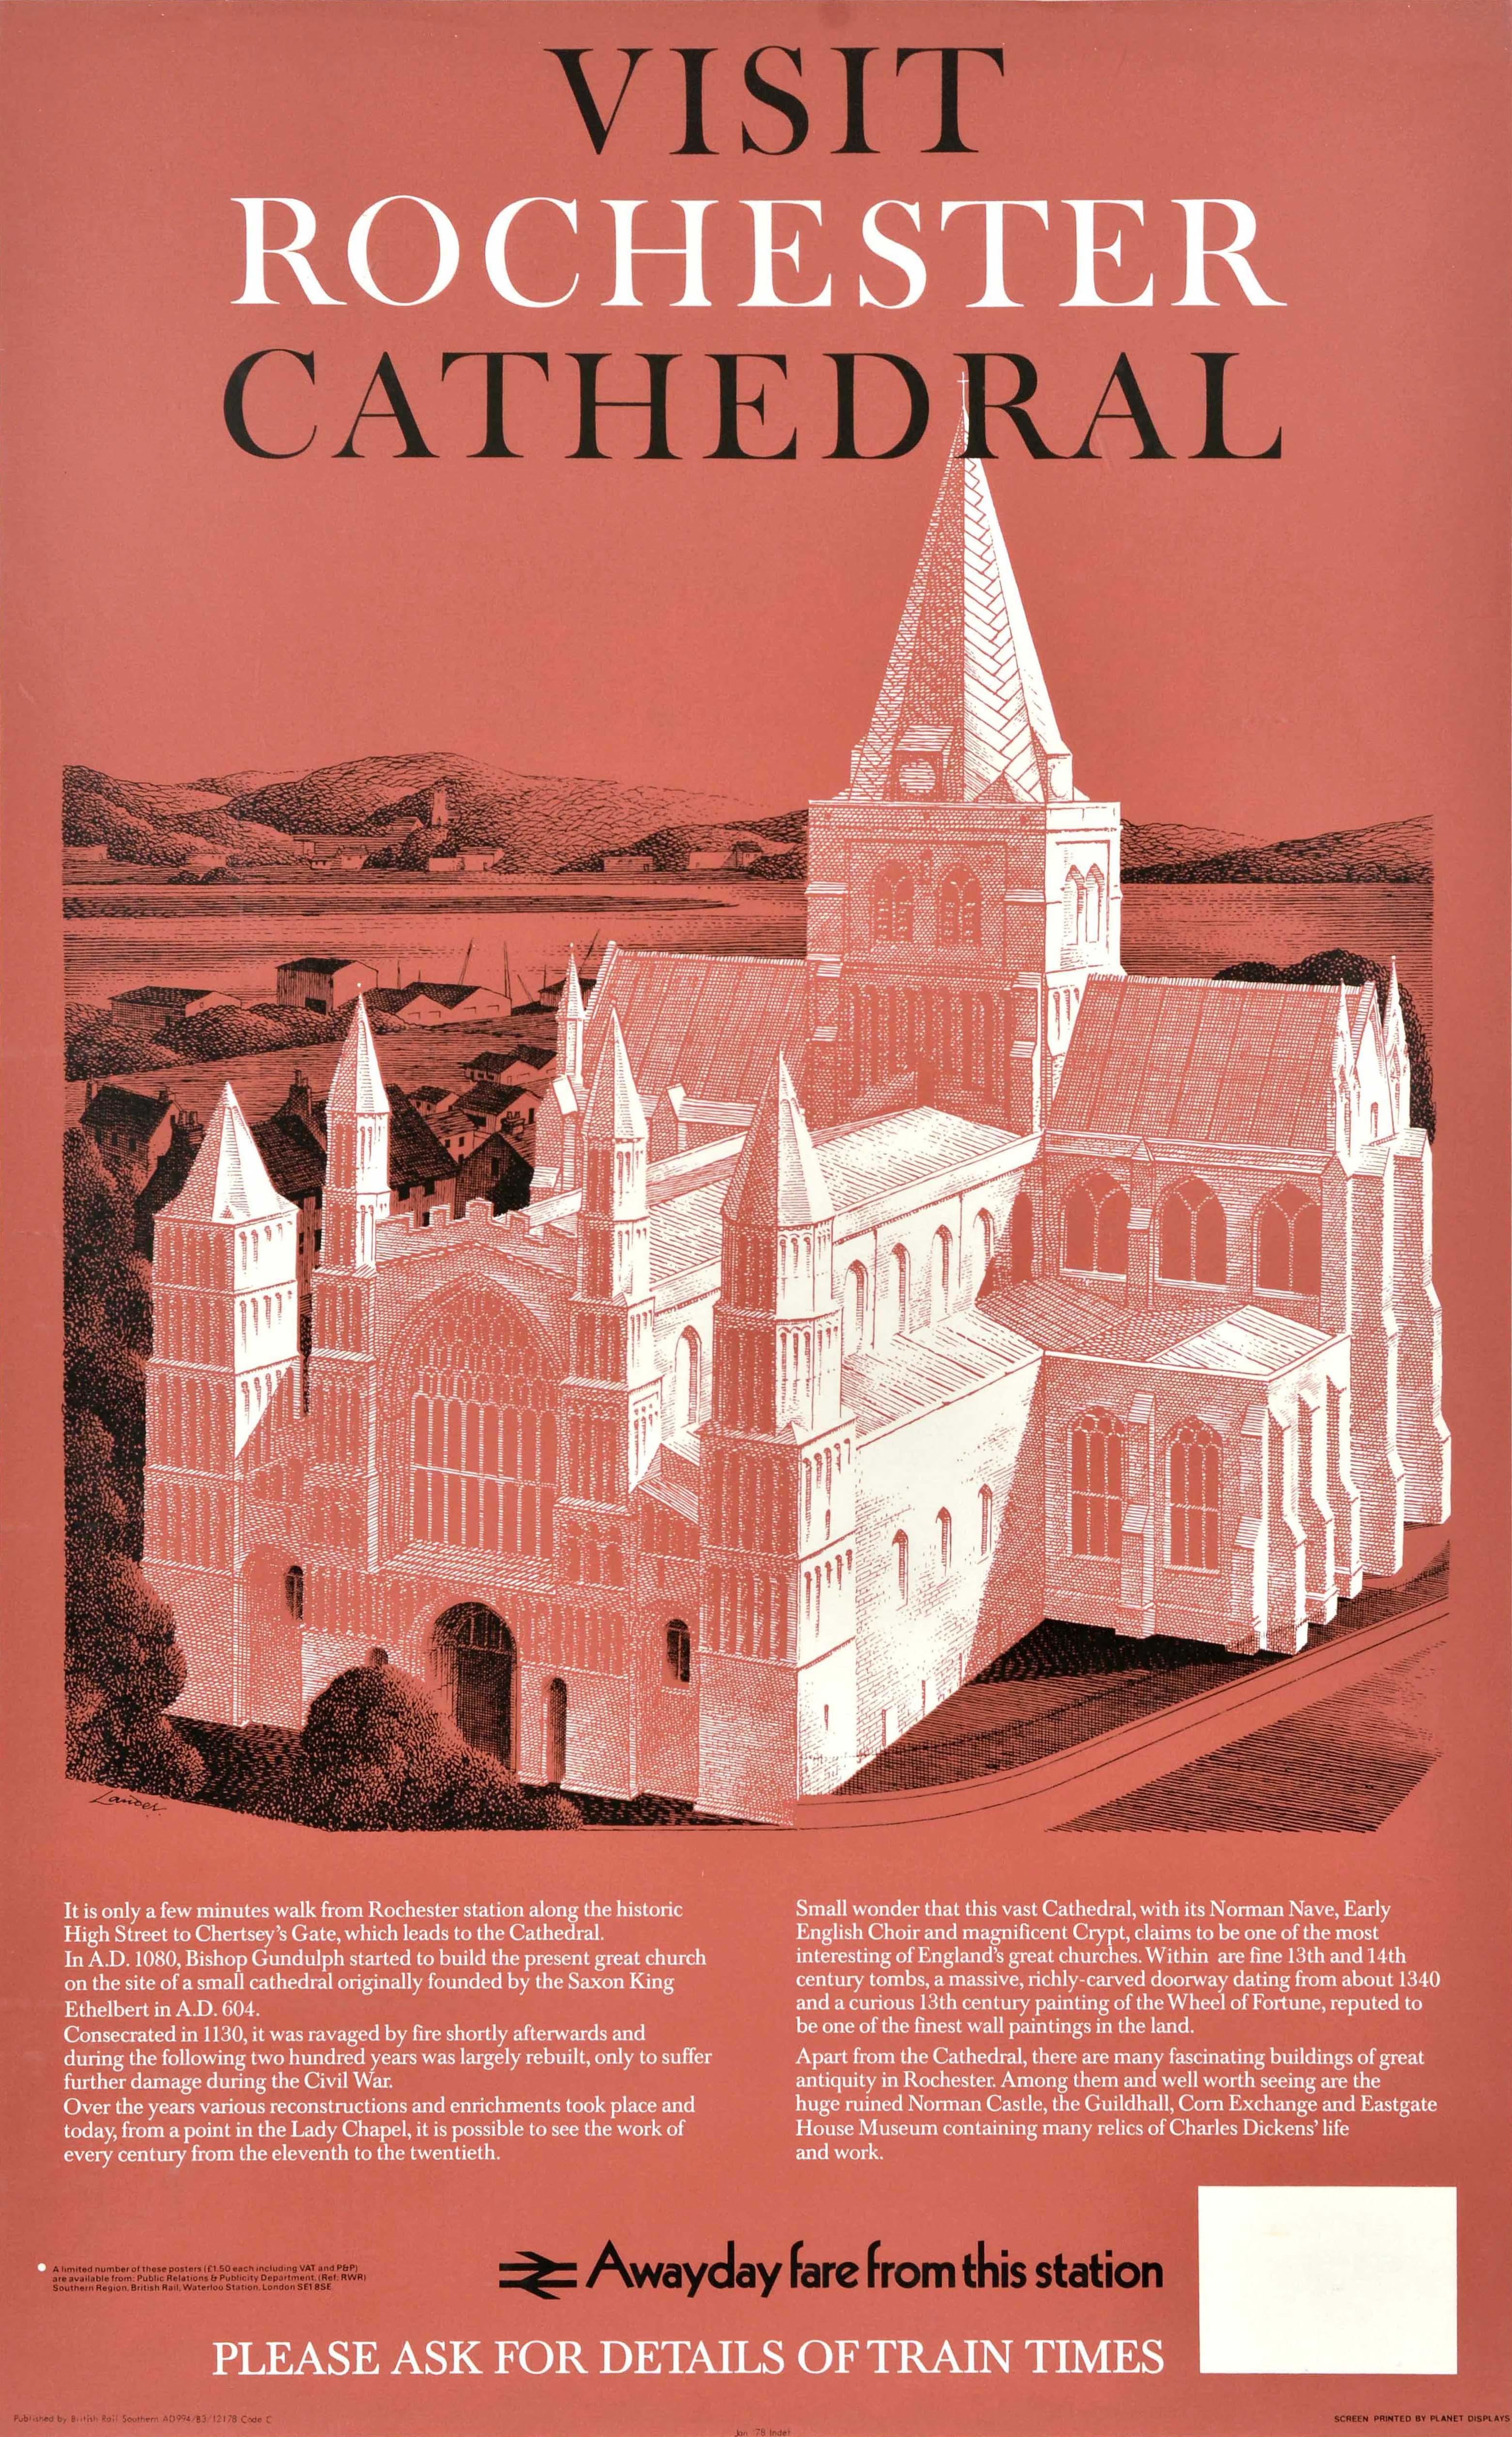 Reginald Lander Print - Original Vintage Train Travel Poster Rochester Cathedral British Rail Lander